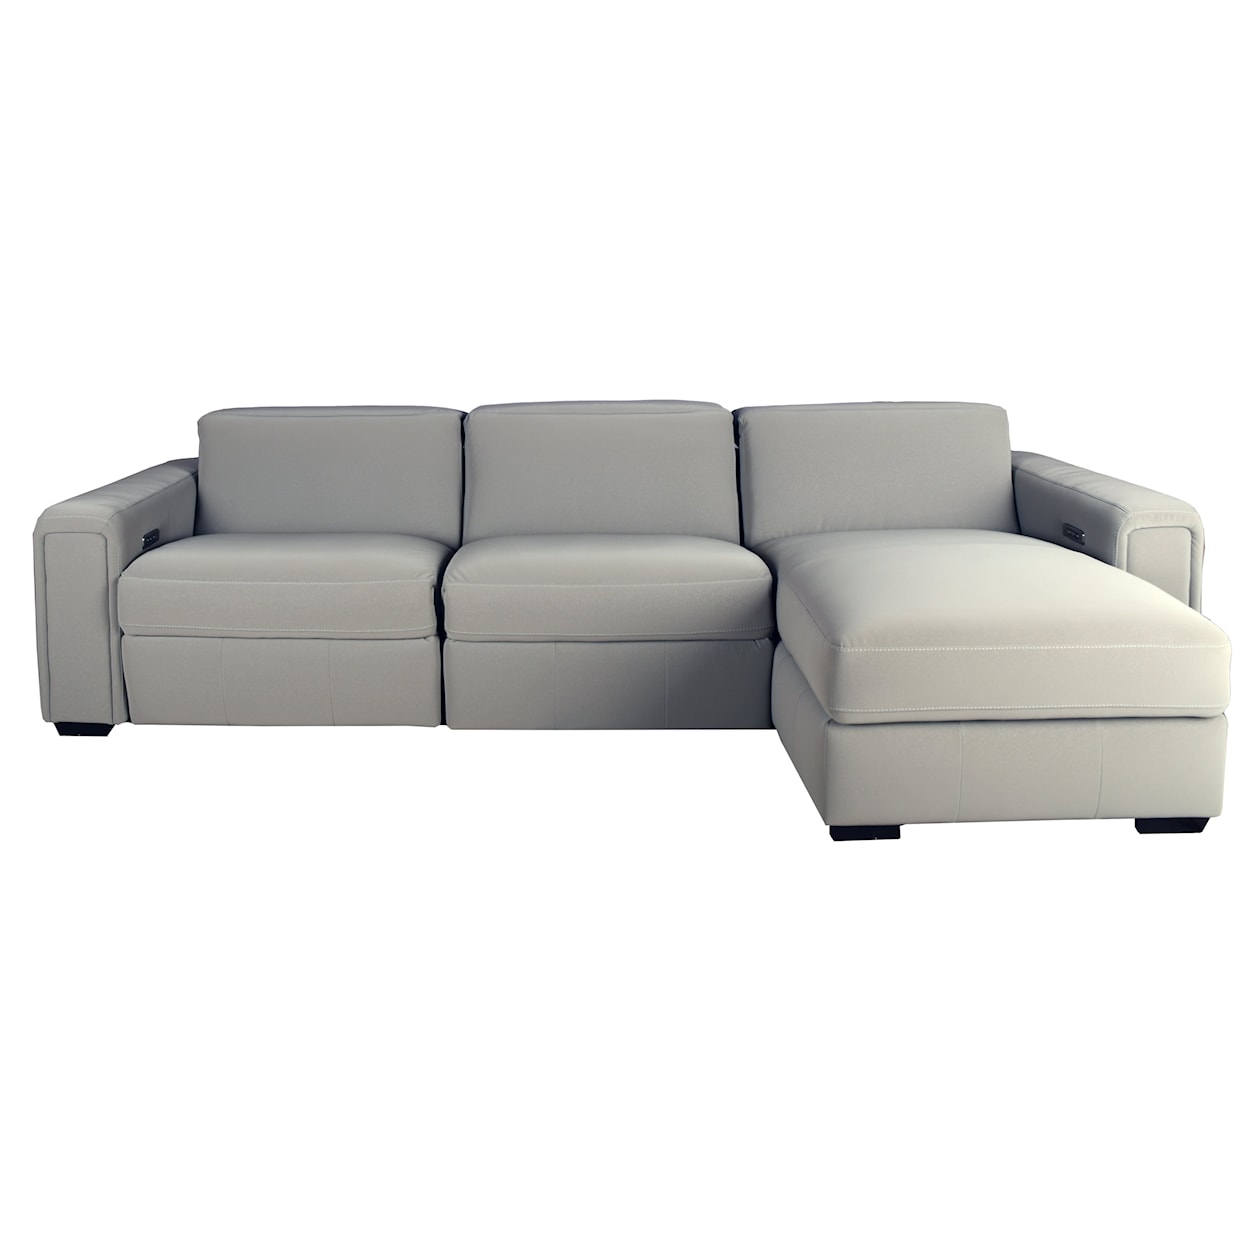 Palliser Titan 3 Pc. Reclining Sectional Sofa